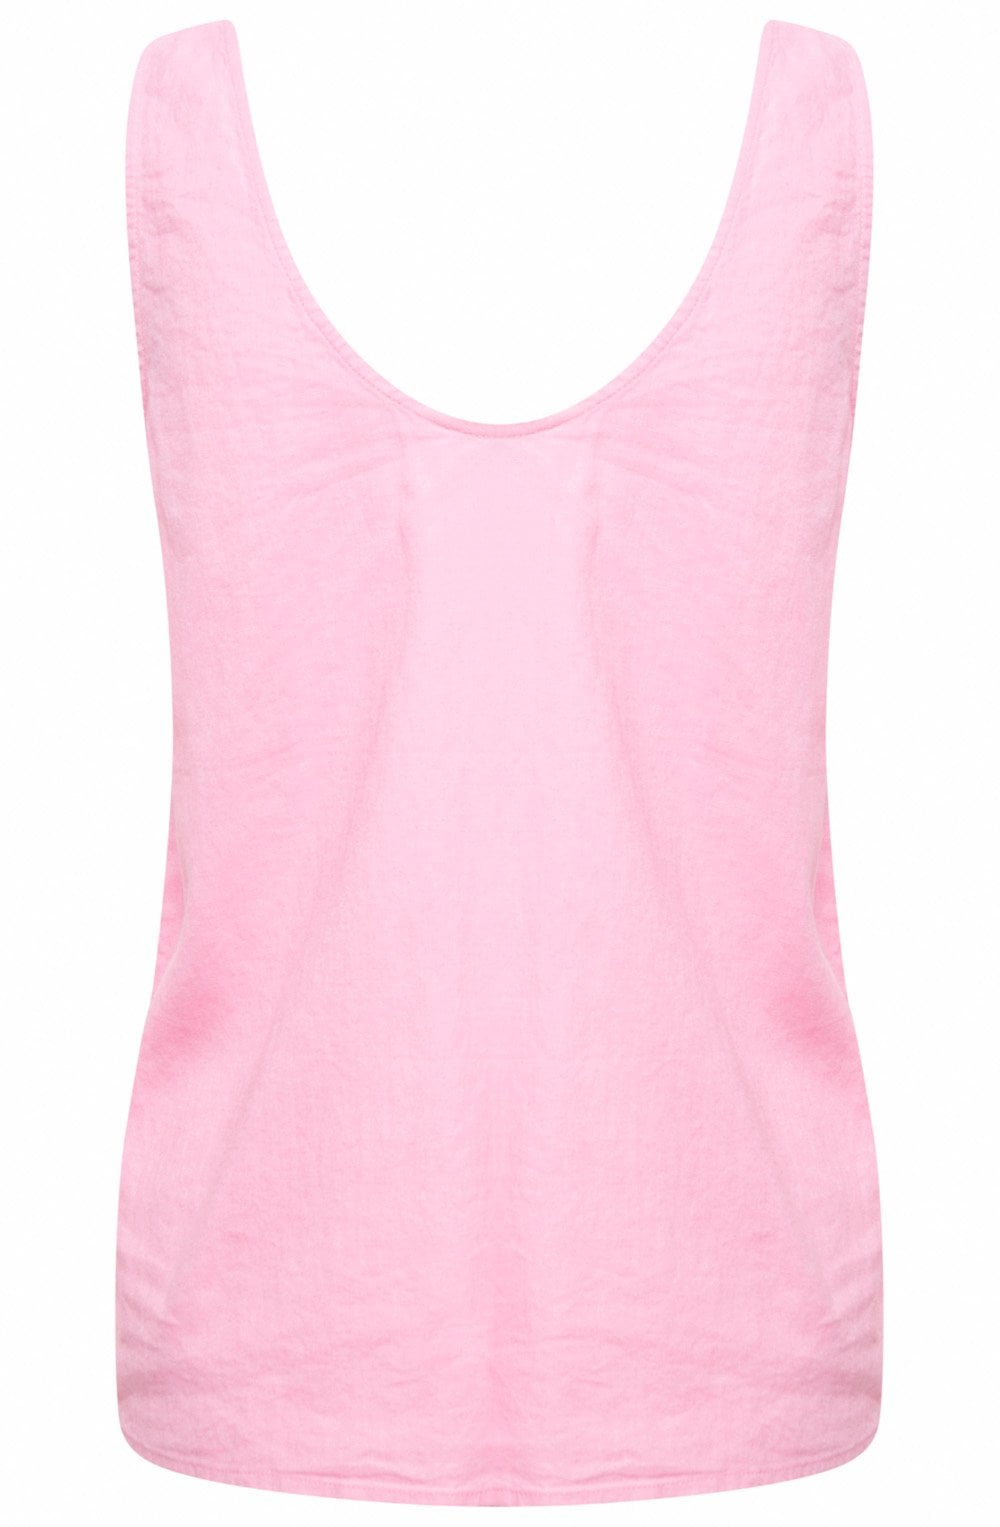 B.young Falakka pink linen vest Top